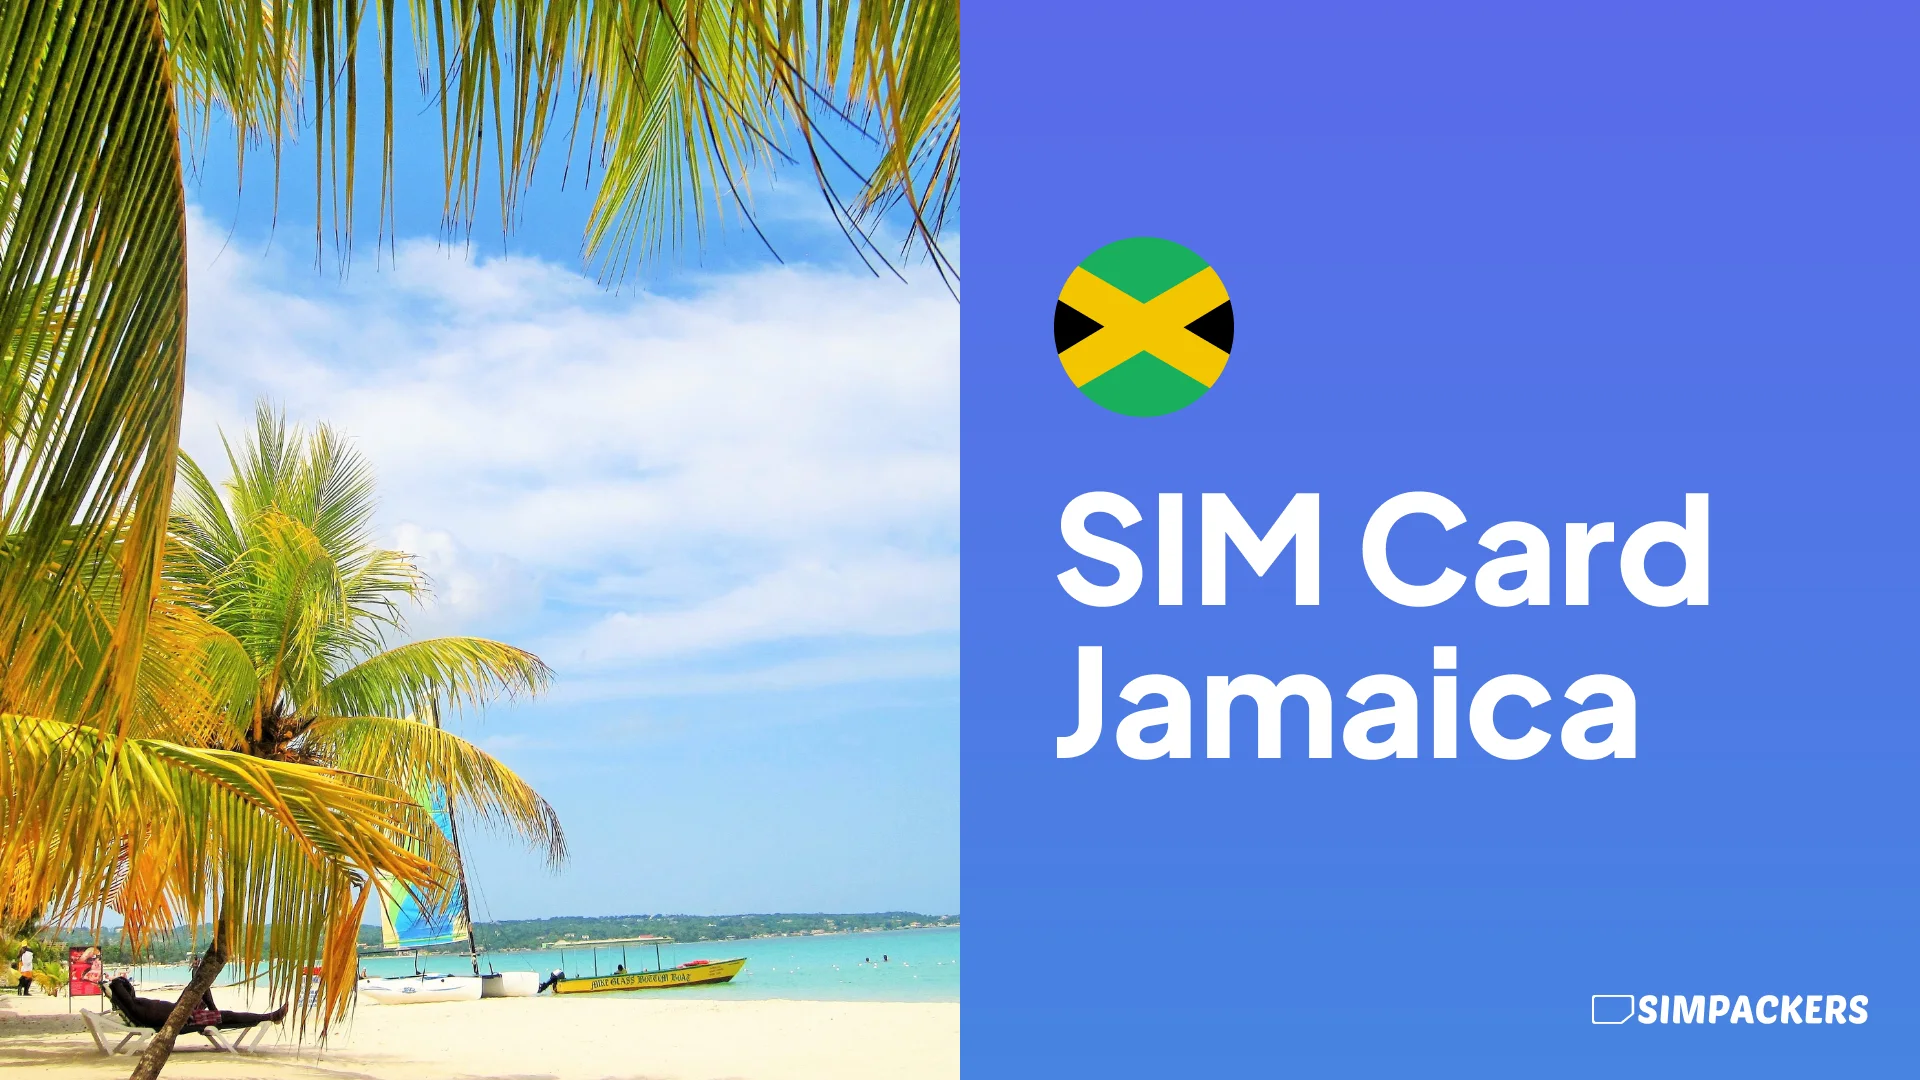 EN/FEATURED_IMAGES/sim-card-jamaica.webp